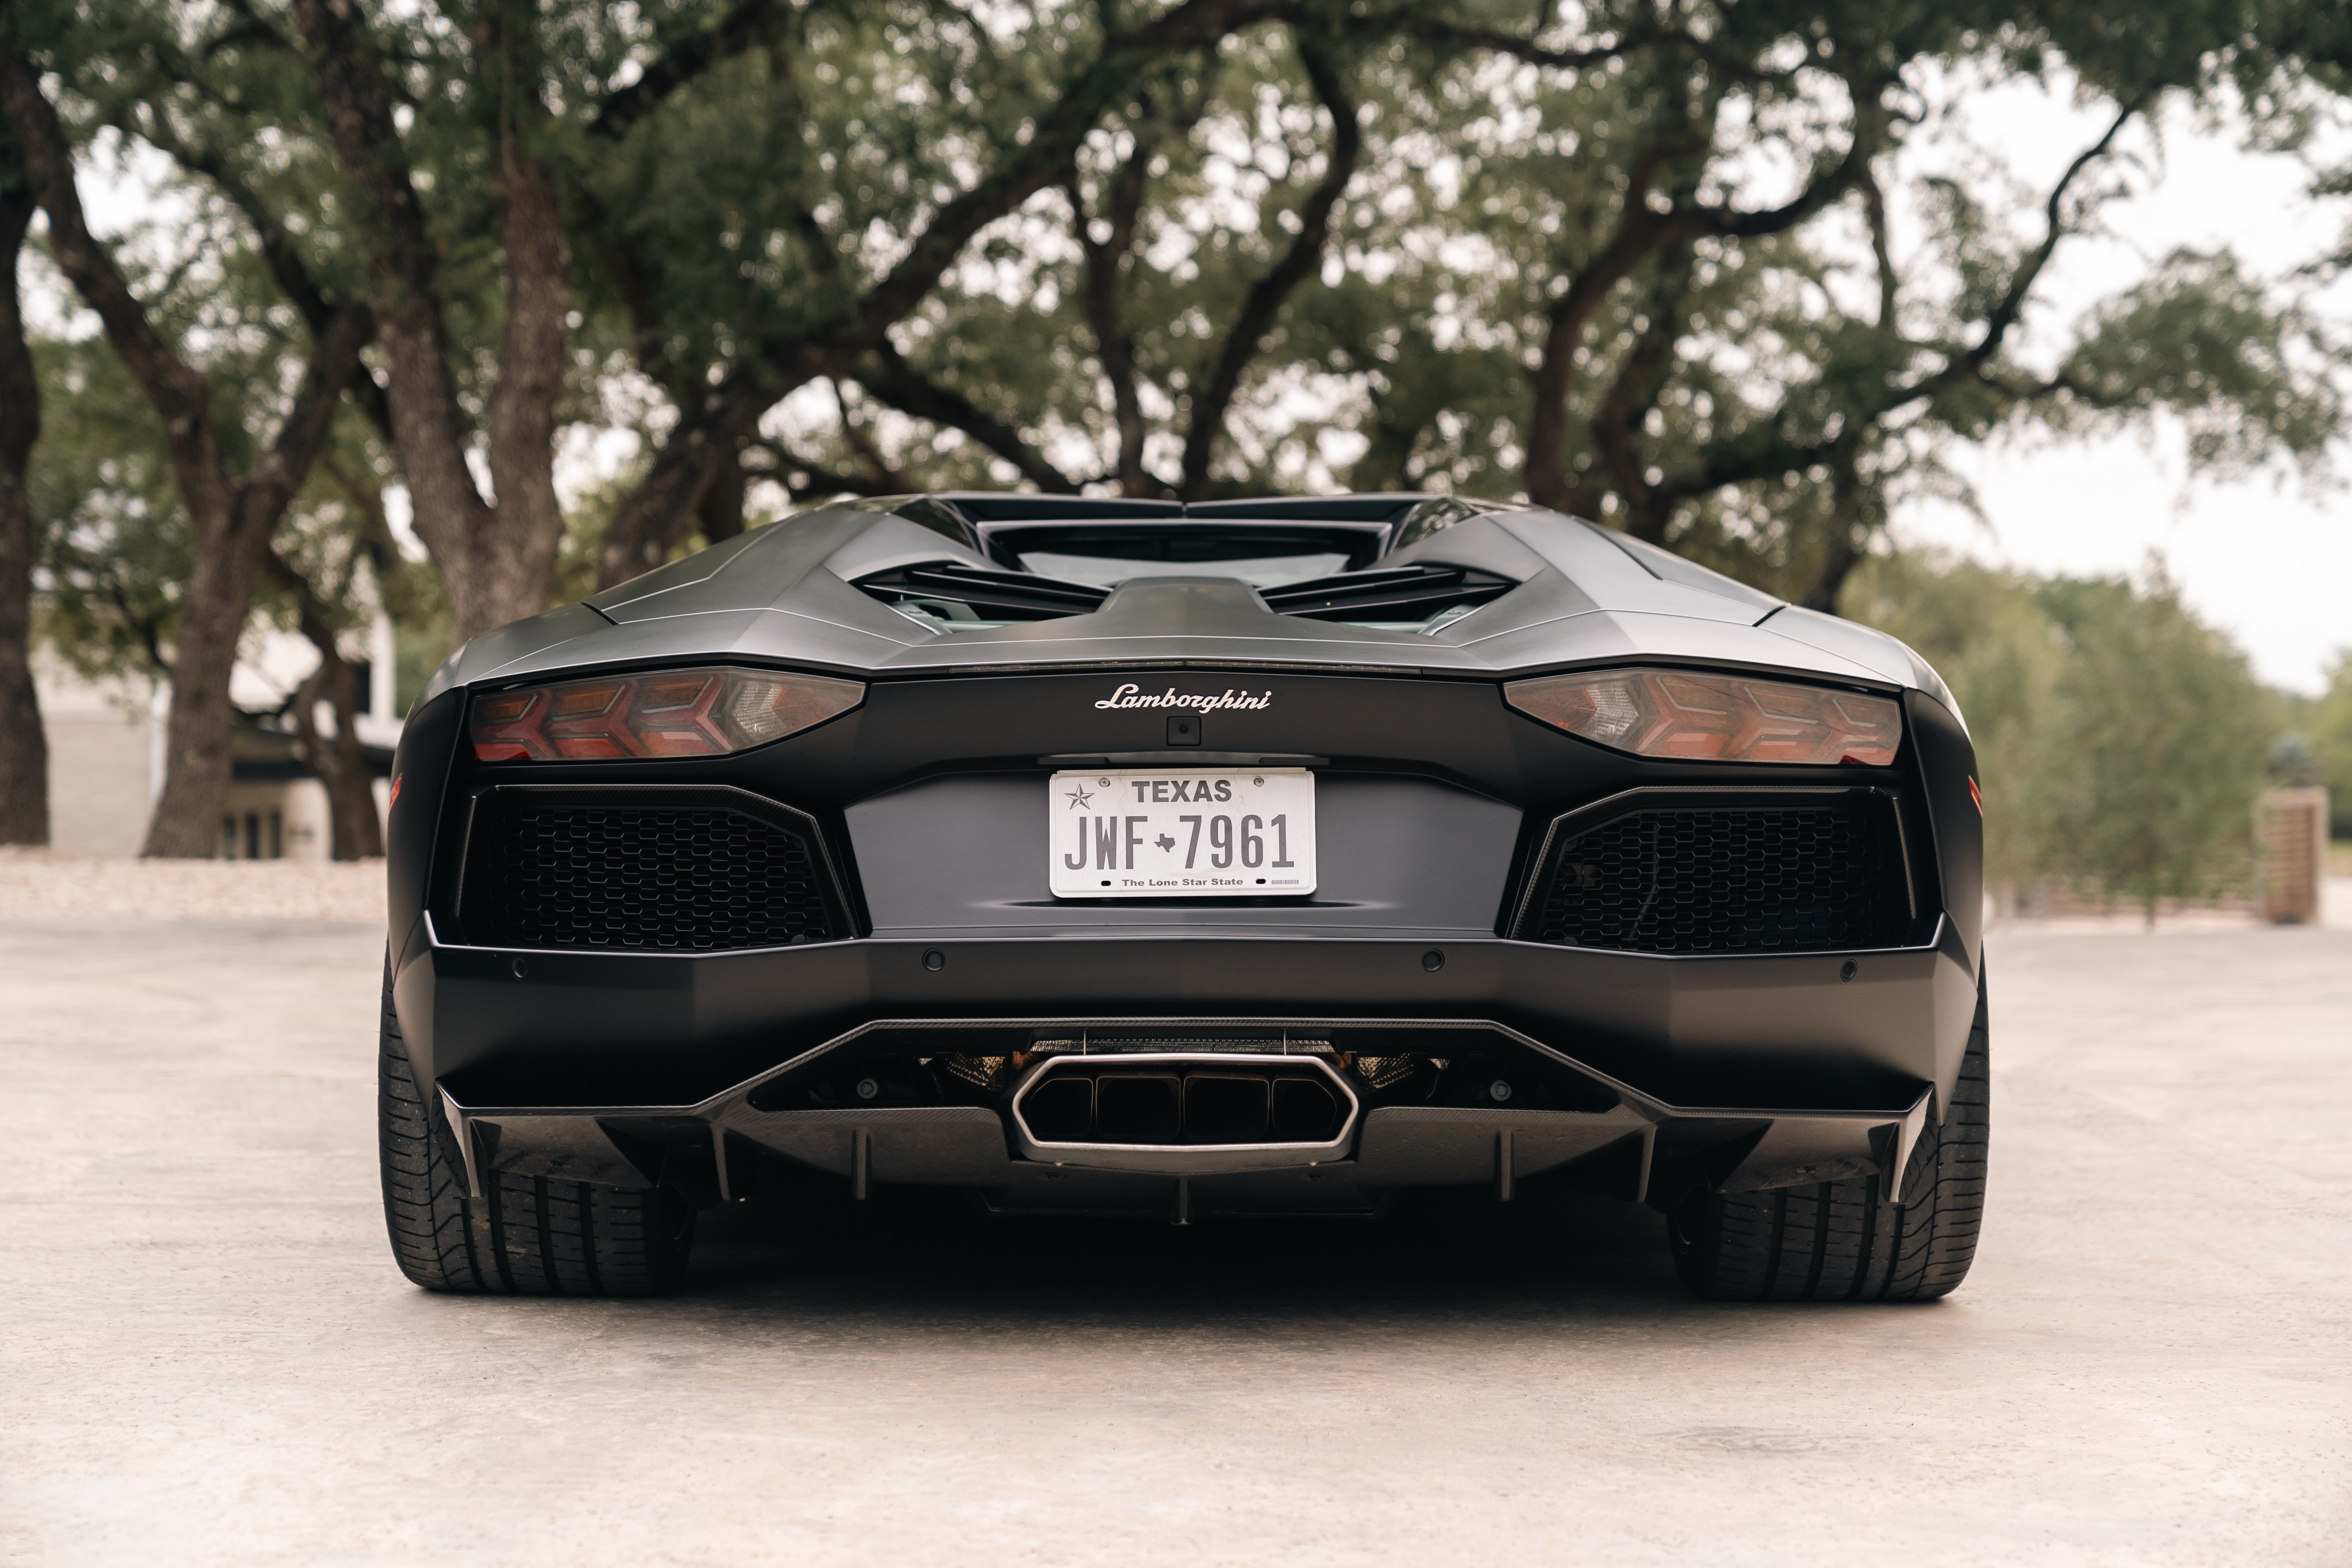 Lamborghini Aventador LP 700-4 in Dripping Springs, TX.